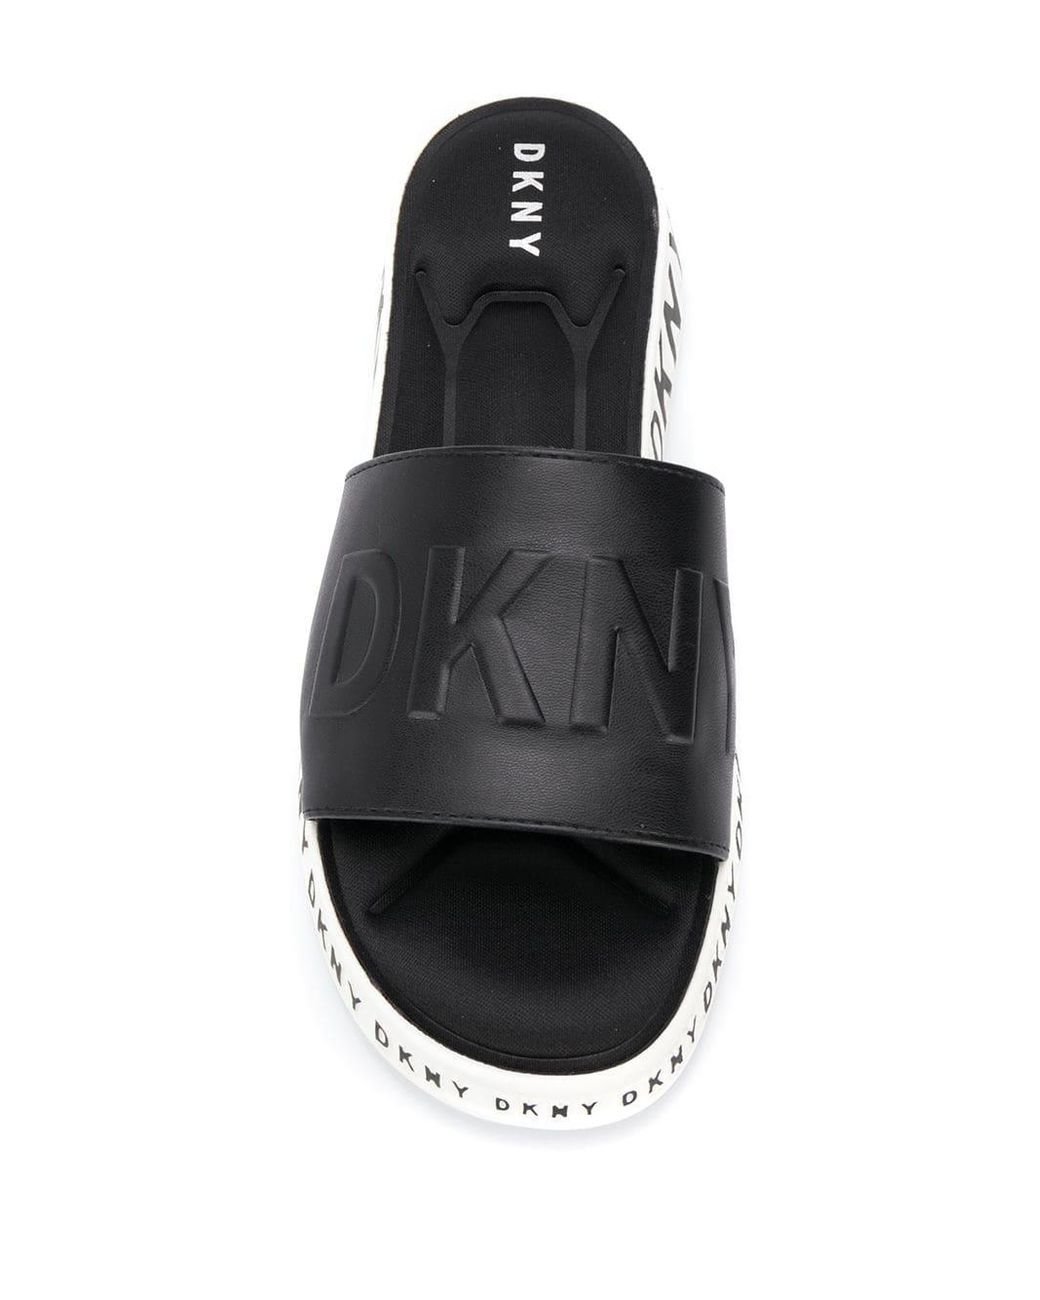 DKNY Mara Slide in Black | Lyst Canada